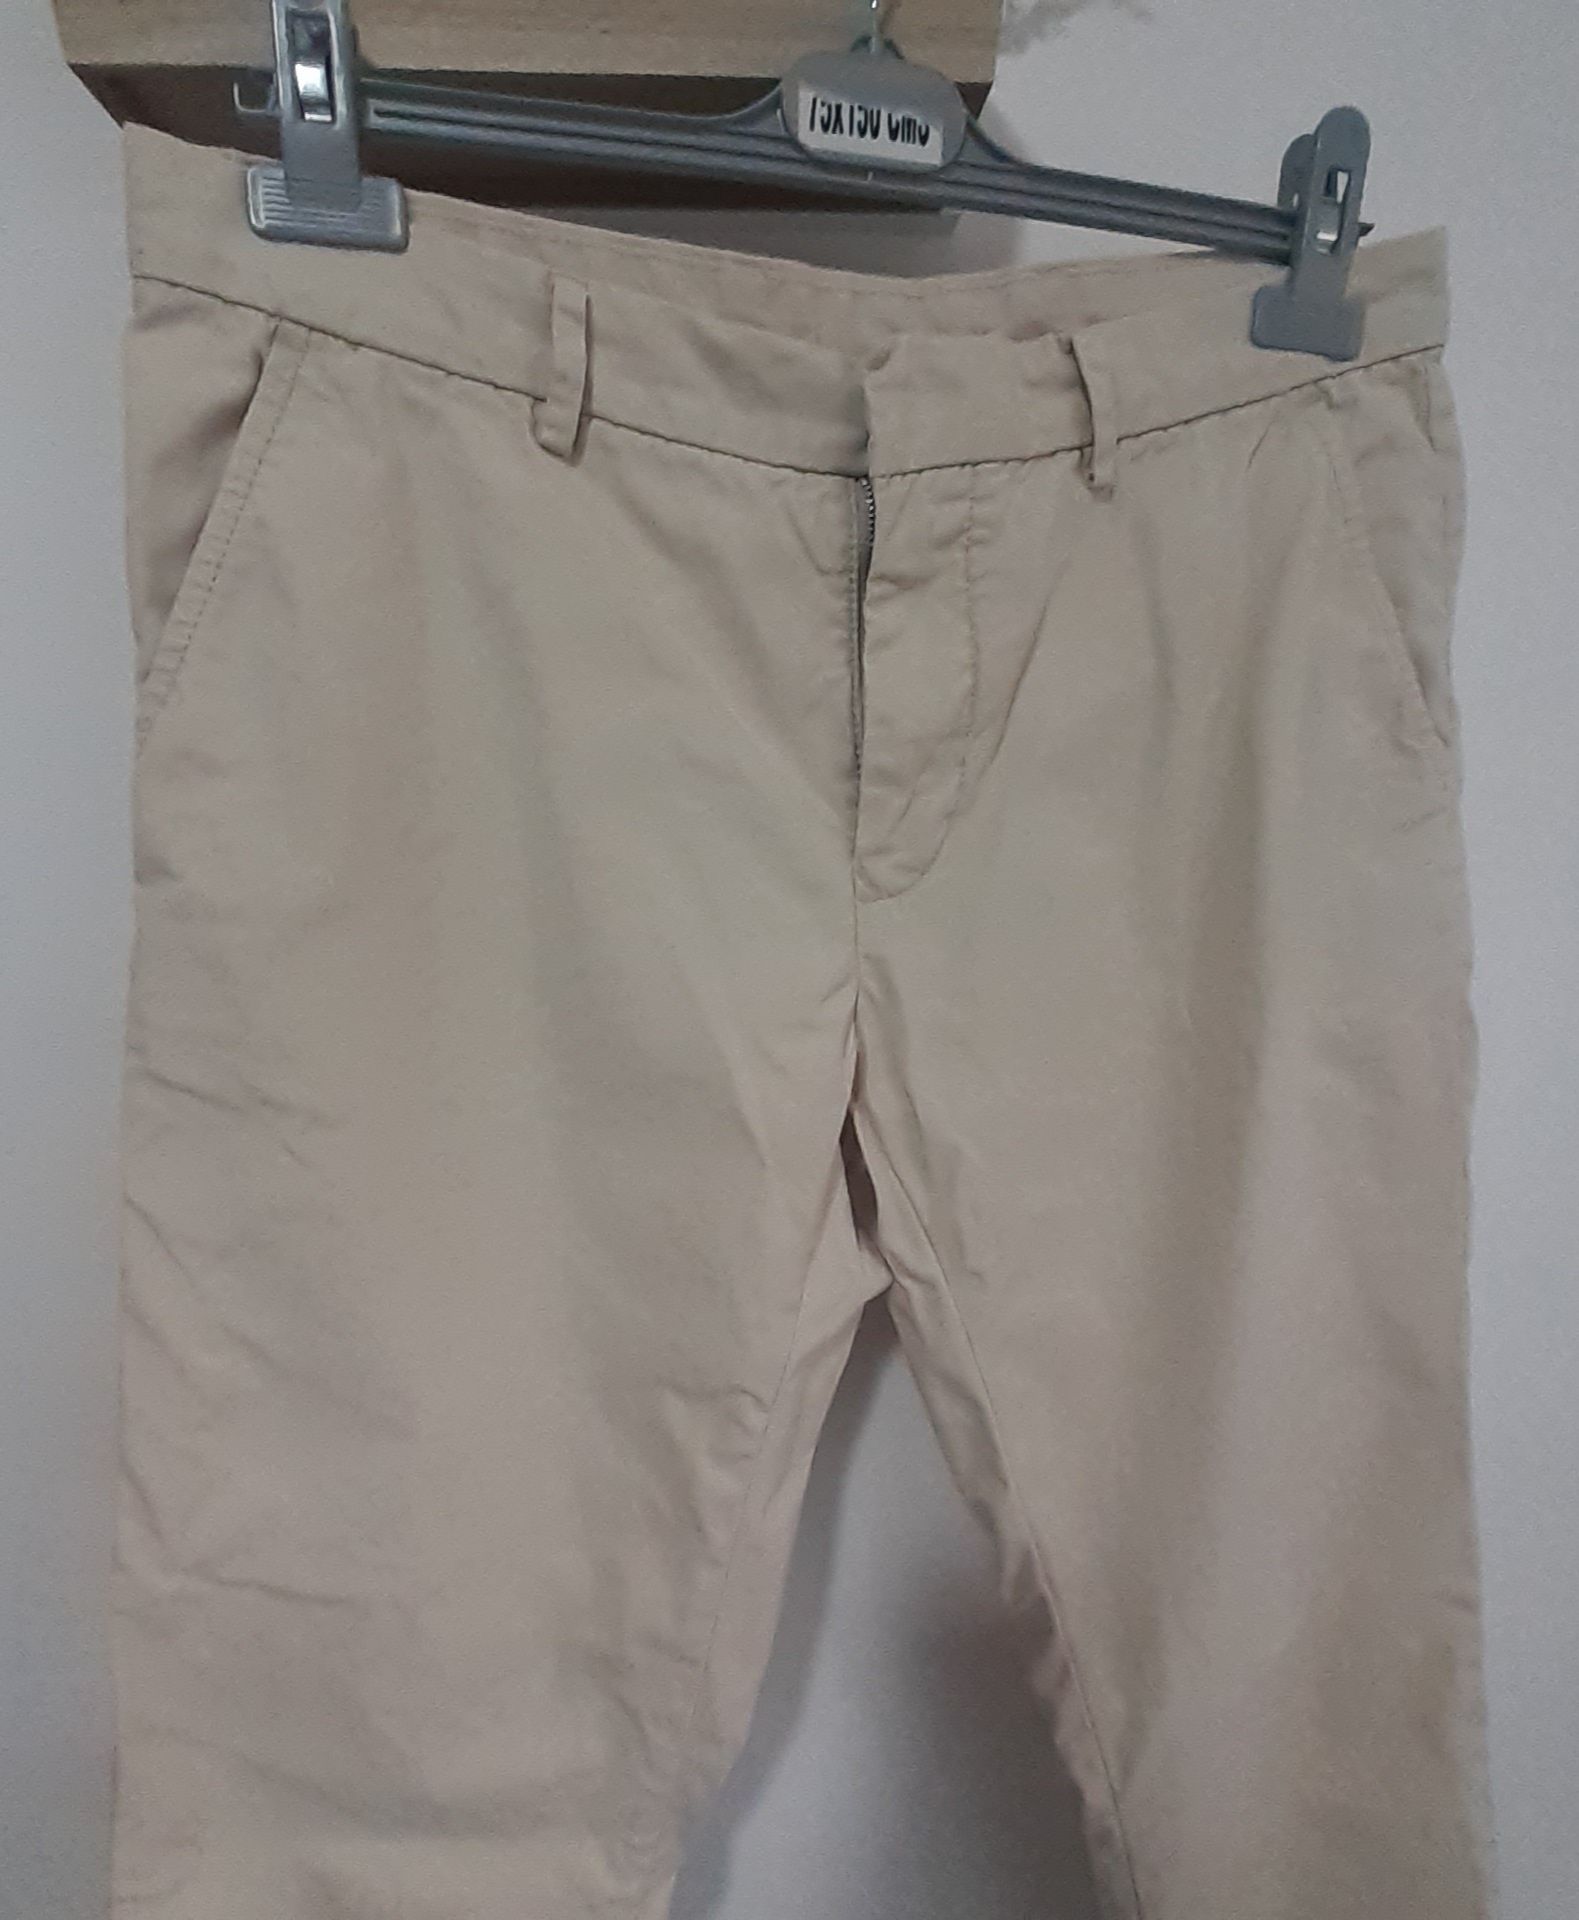 Pantaloni Tommy Hilfiger Marimea M, 86 cm talie, 103cm lungime.